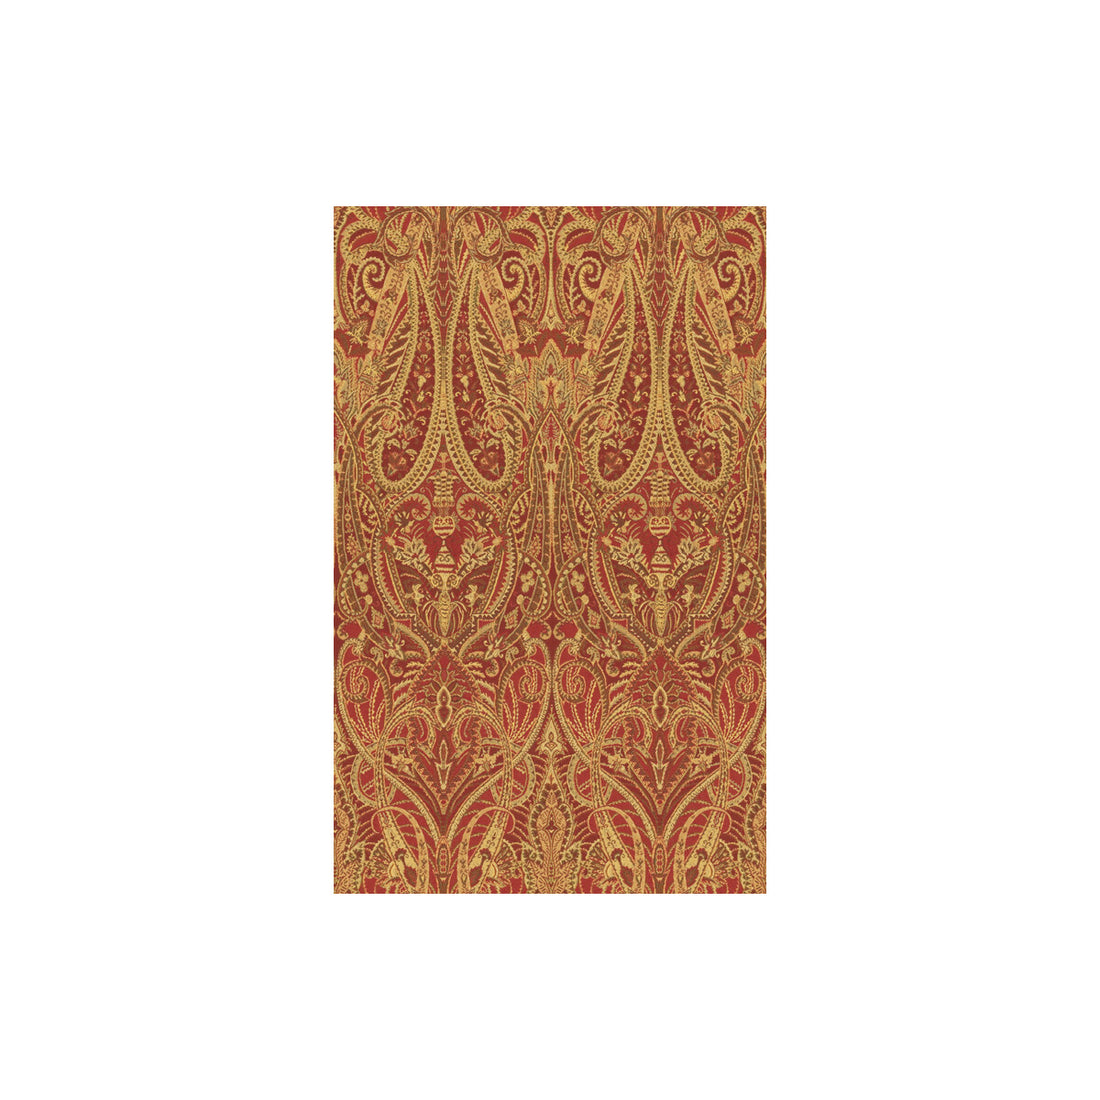 Kravet Design fabric in 31380-19 color - pattern 31380.19.0 - by Kravet Design in the Gis collection